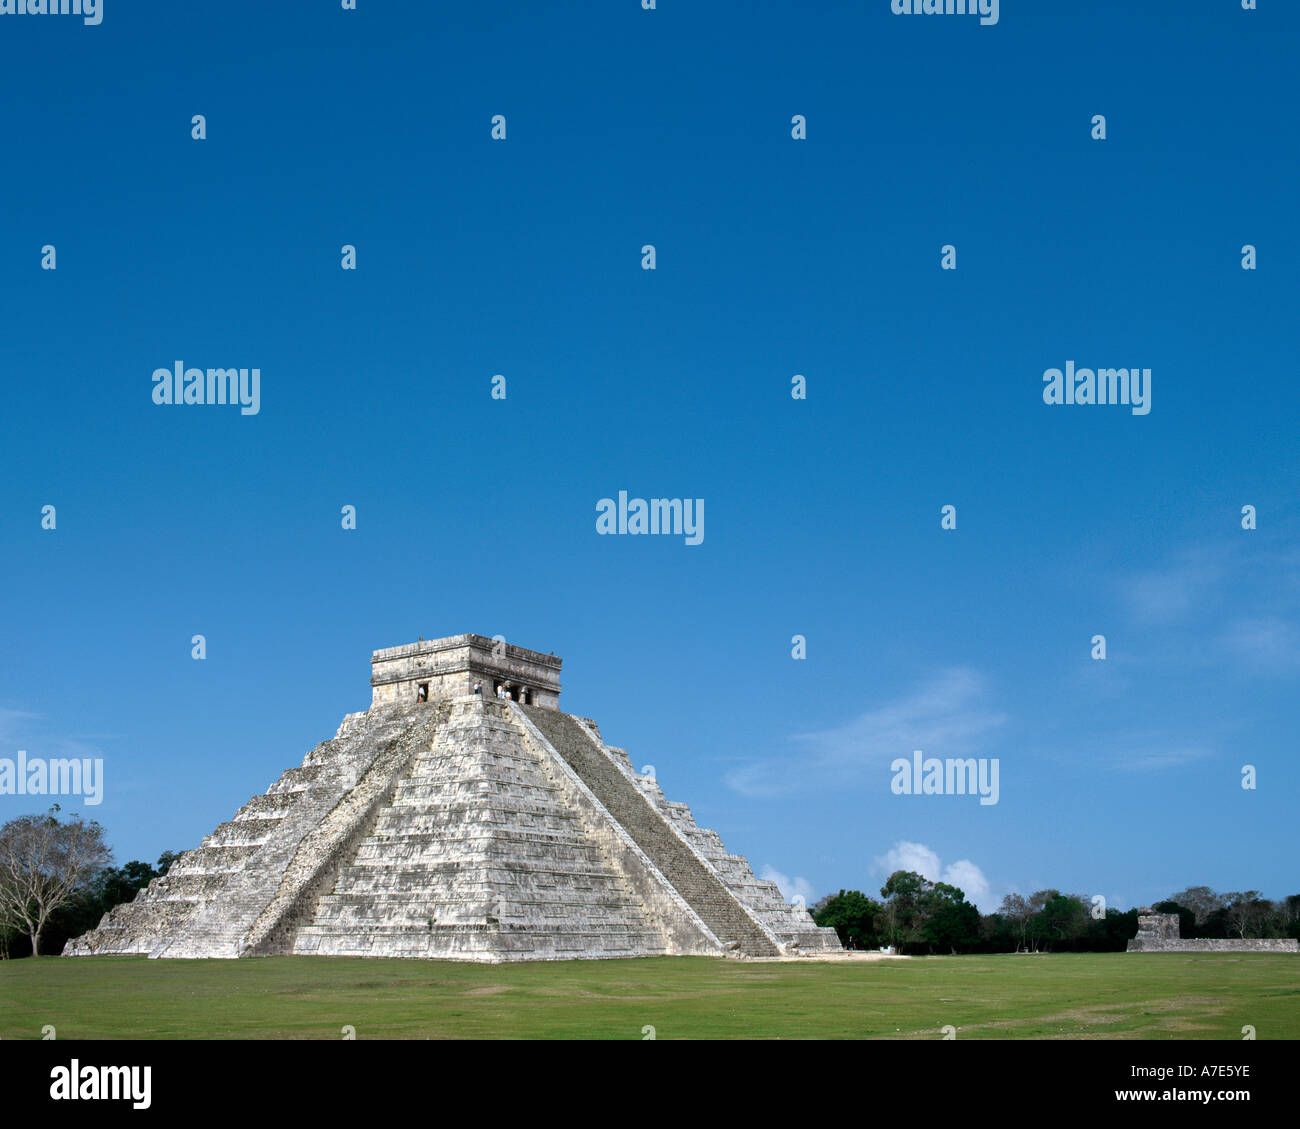 El Castillo or Pyramid of Kukulcan, Mayan Ruins of Chichen Itza, Yucatan Peninsula, Mexico Stock Photo